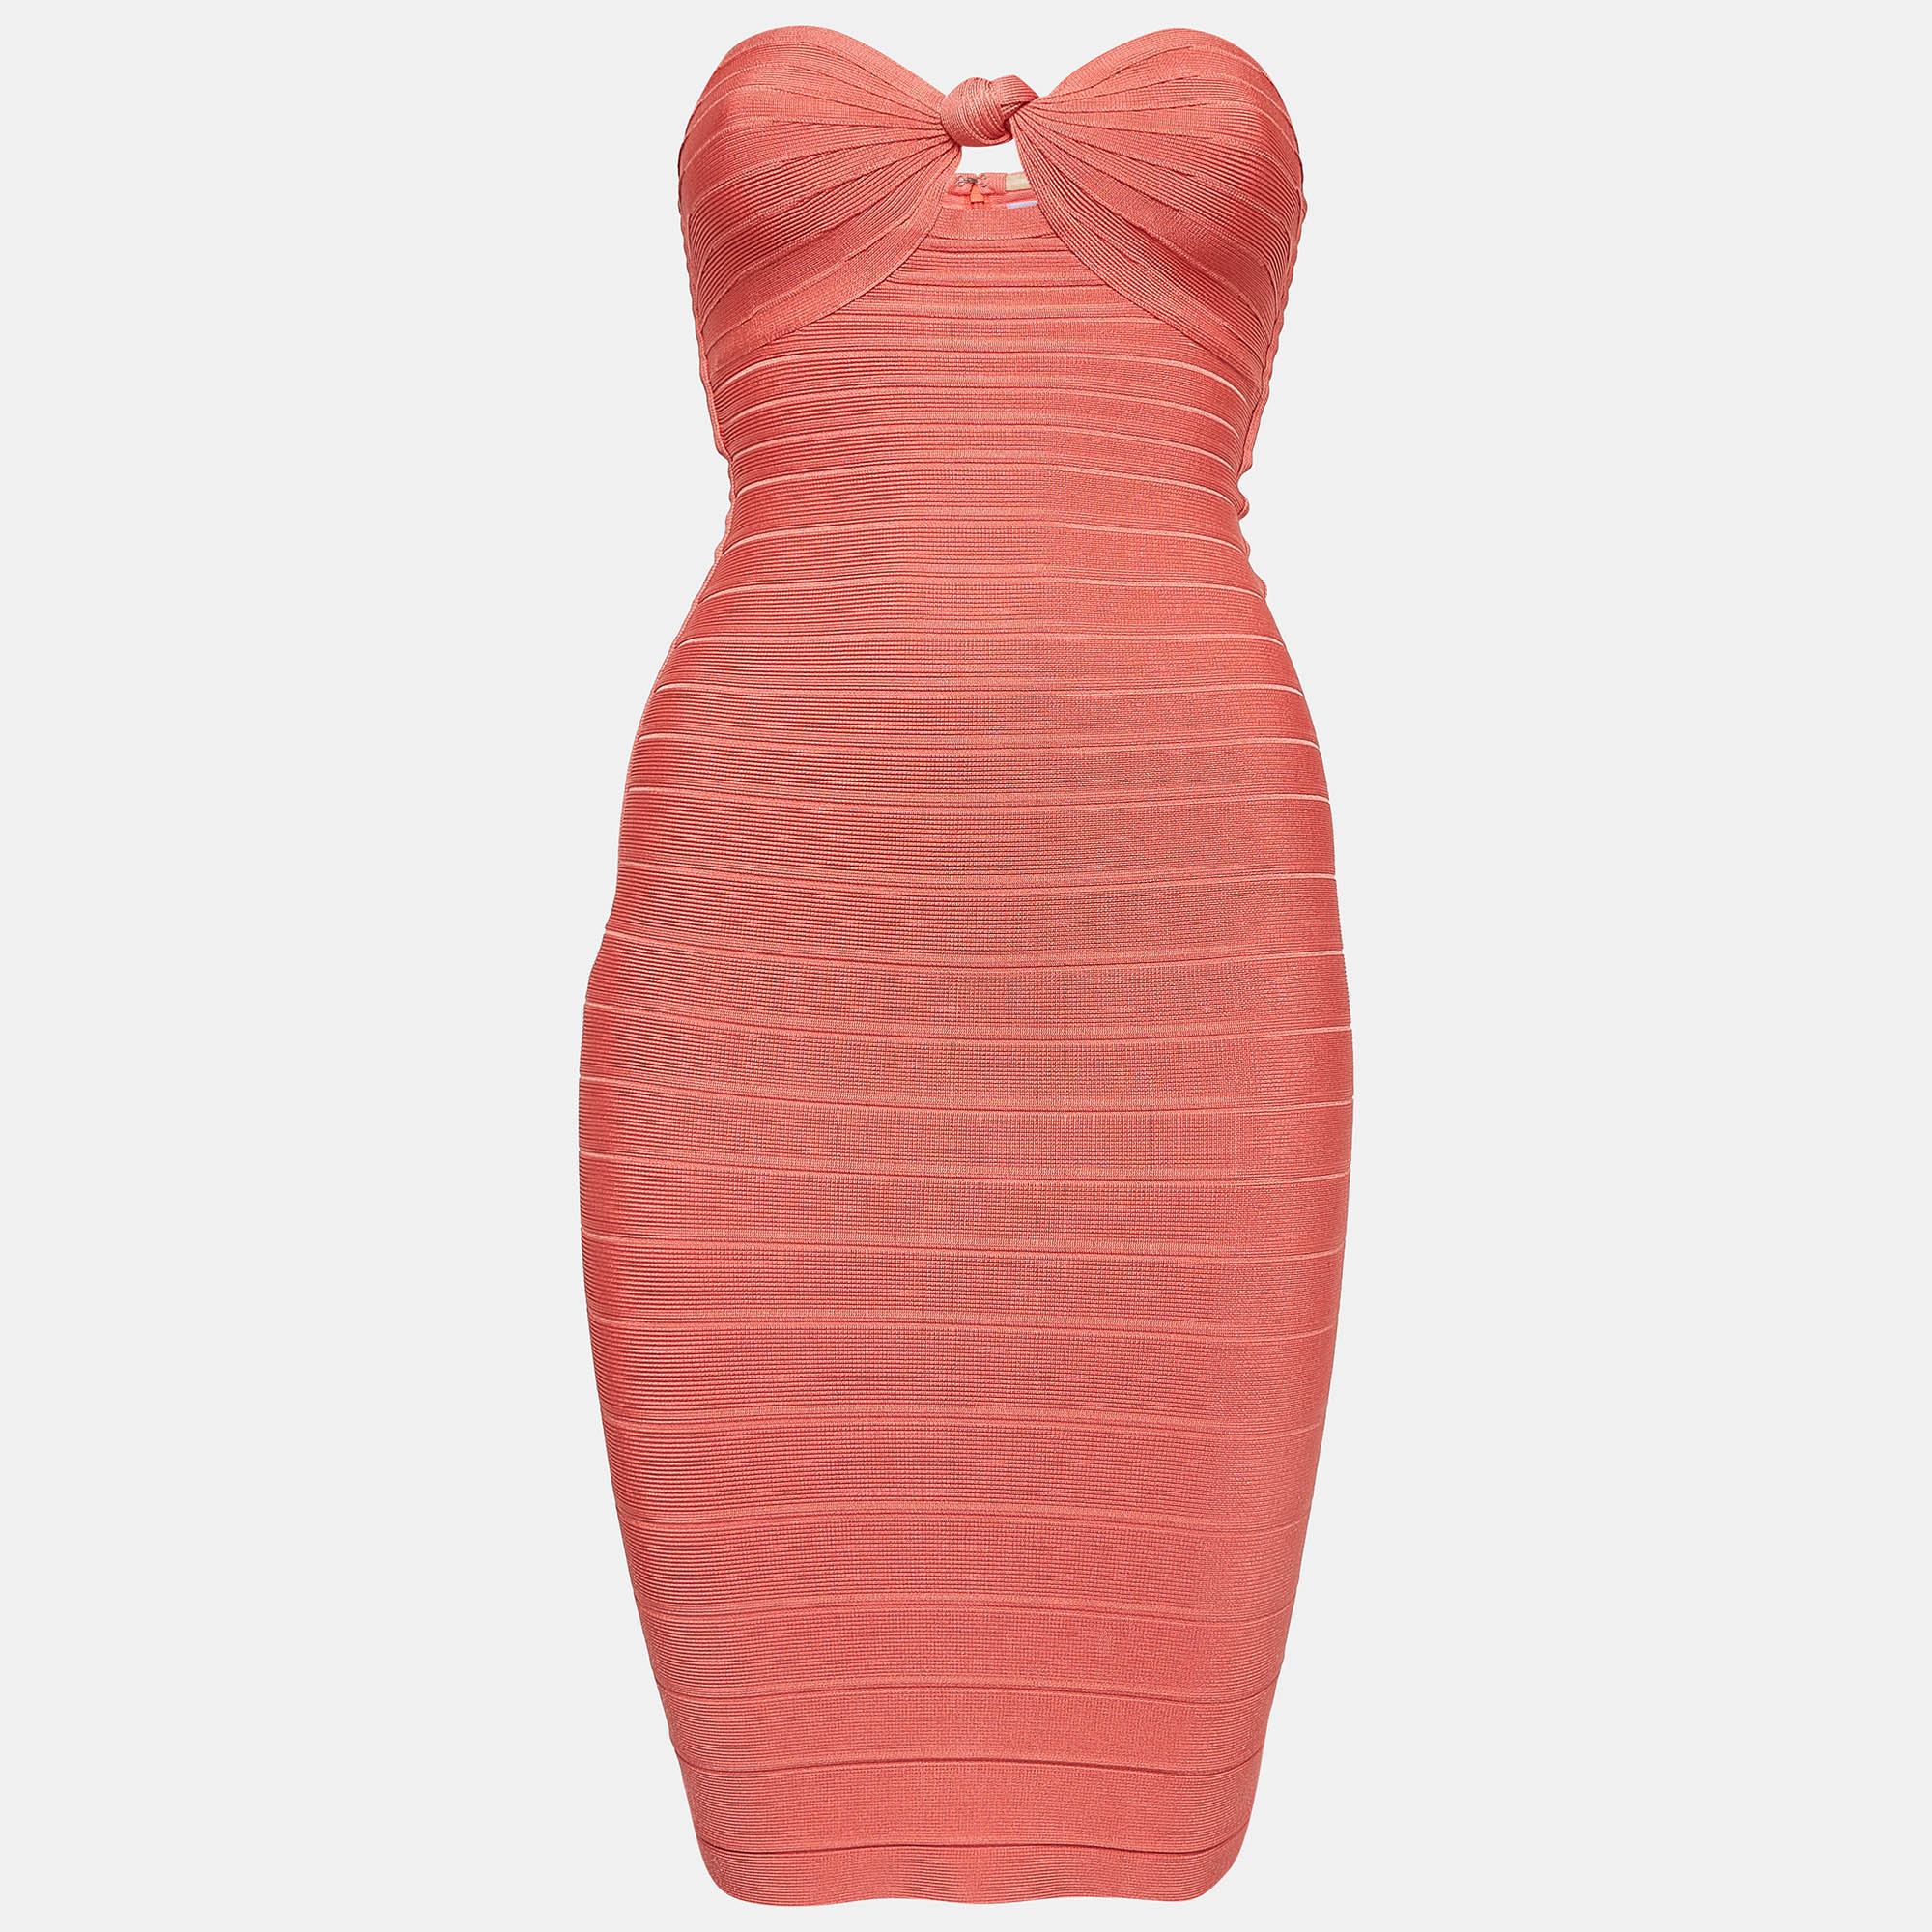 Herve leger coral pink bandage knit strapless mini dress xs